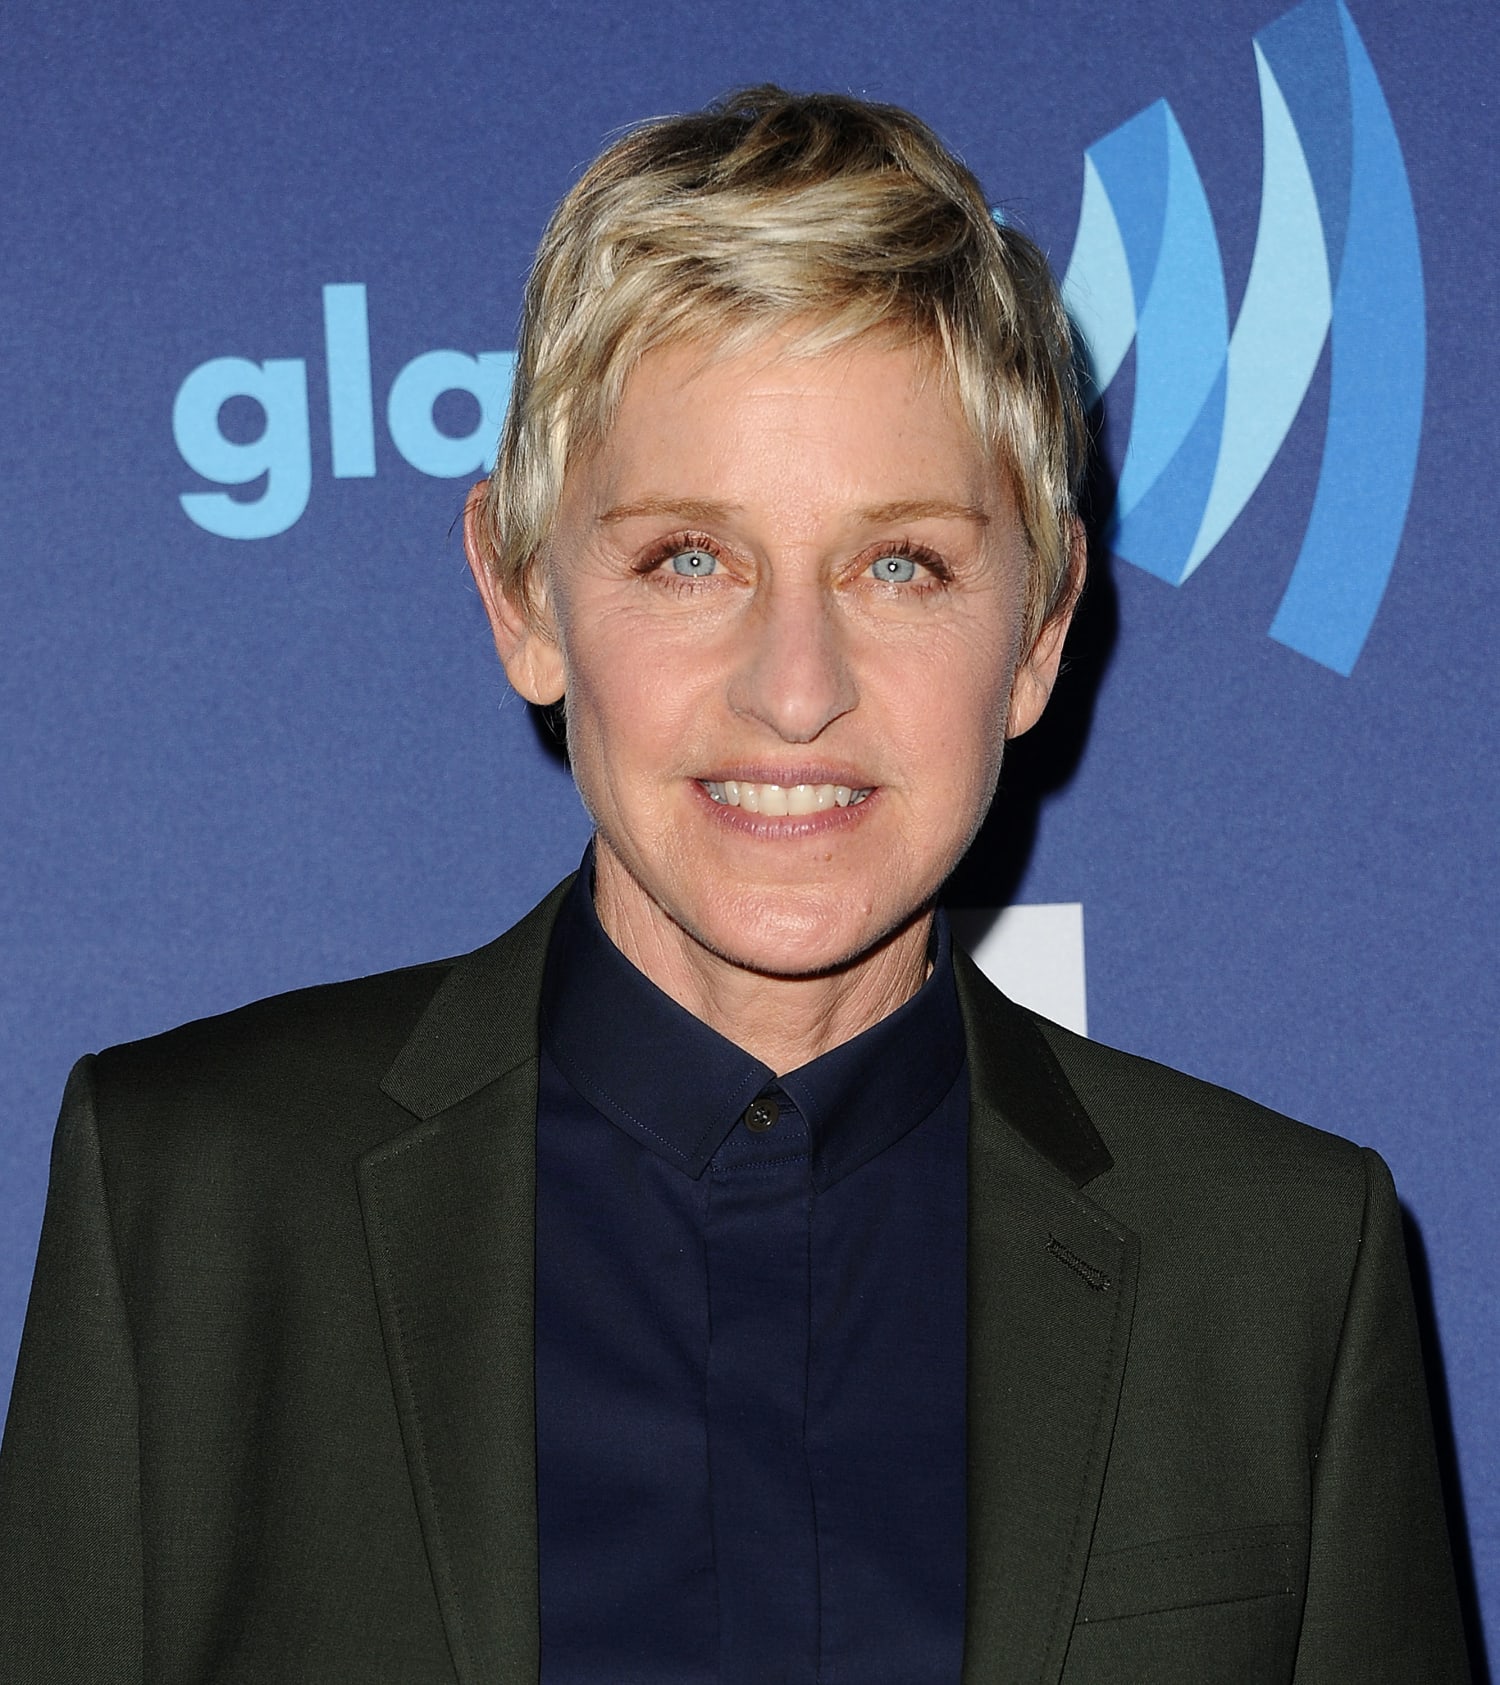 Ellen DeGeneres to Receive Presidential Medal of Freedom